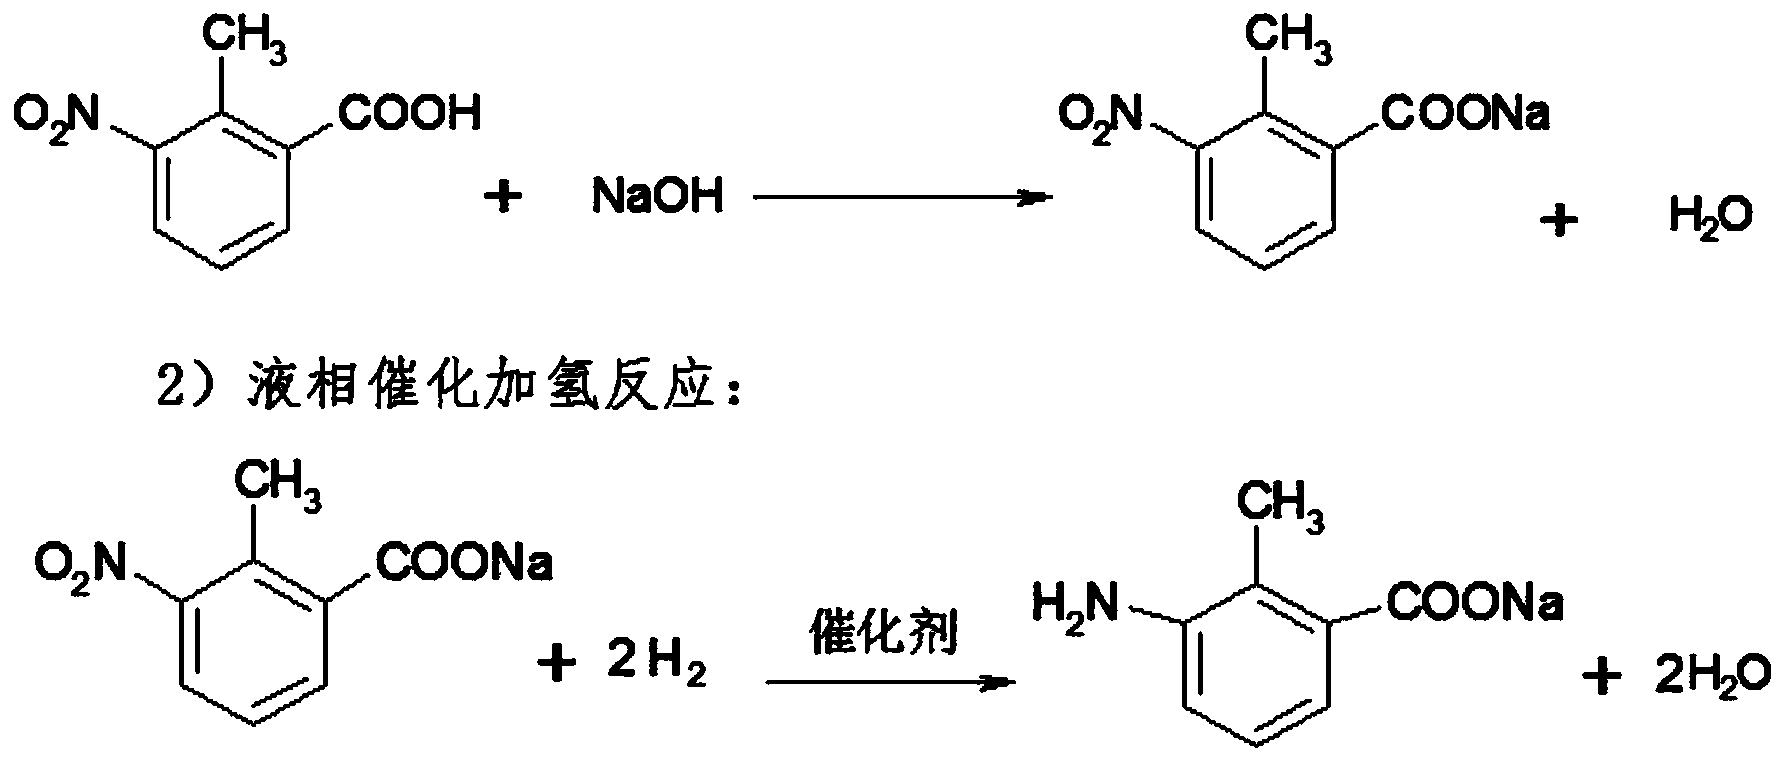 Method for preparing 3-amino-2-methyl benzoic acid